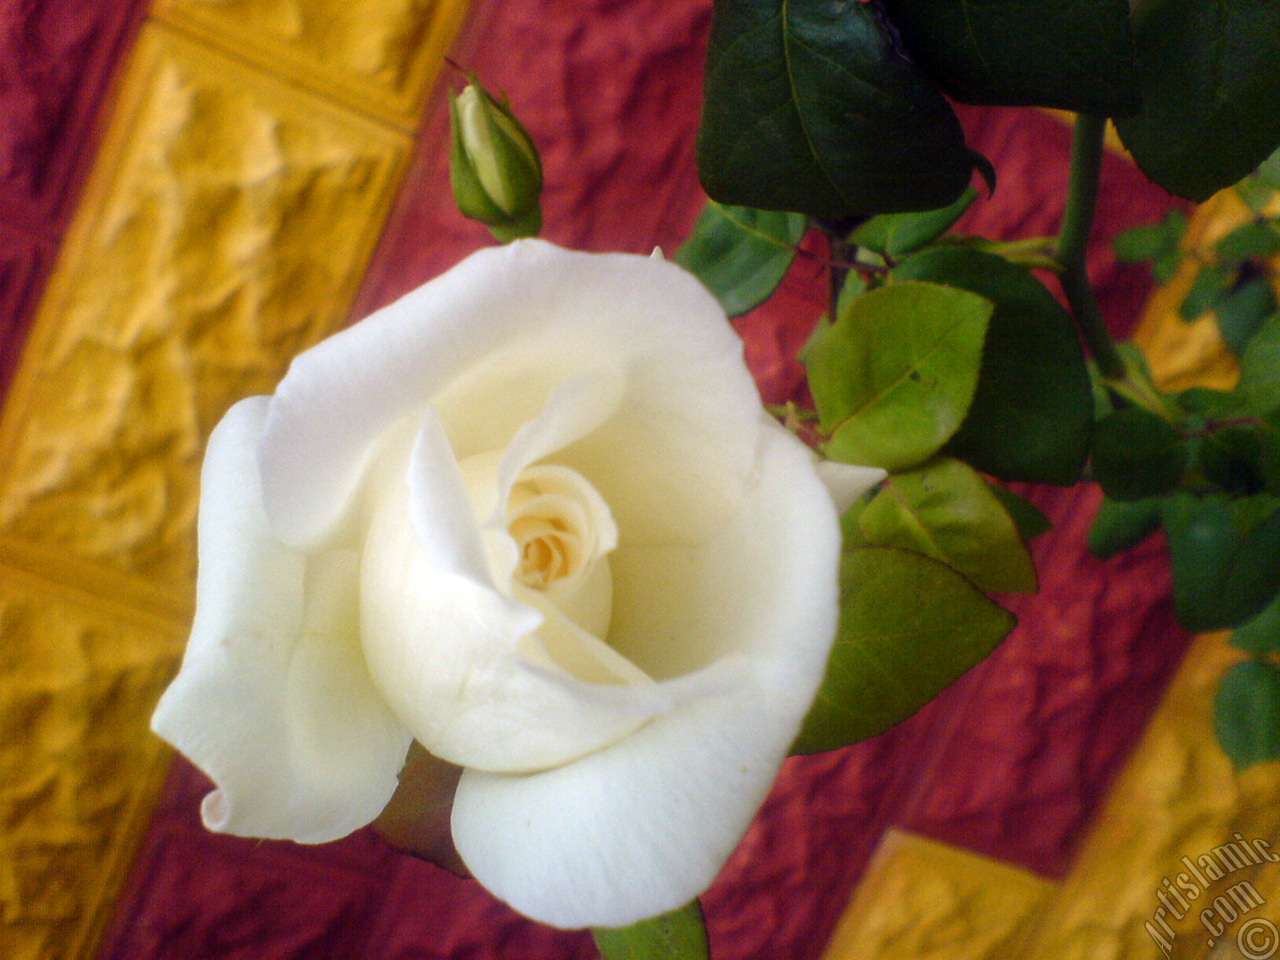 White rose photo.
